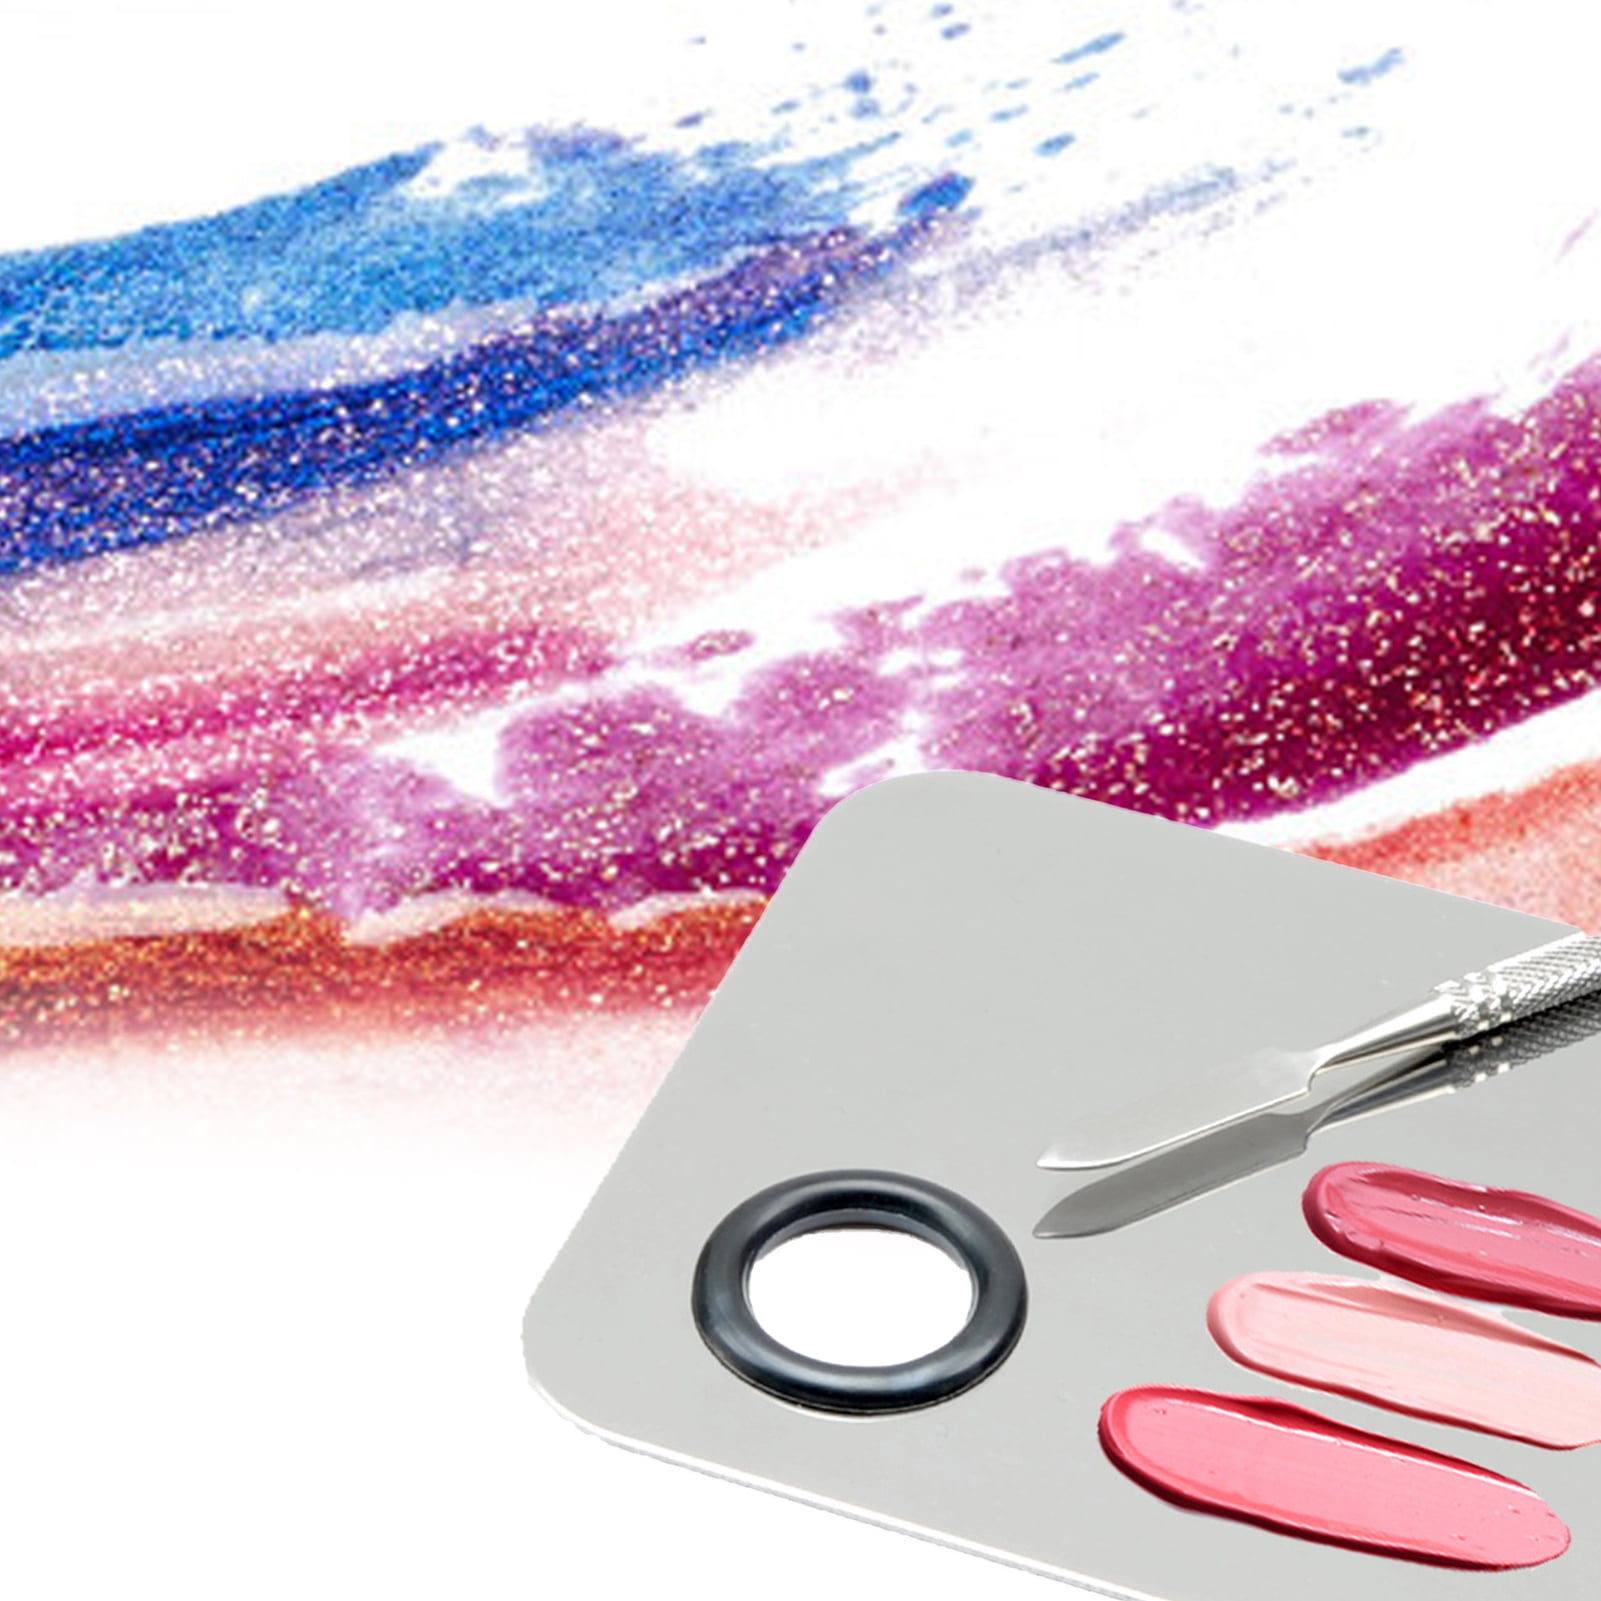 FelinWel - Makeup Mixing Palette, Stainless Steel Make-up Palette Ble